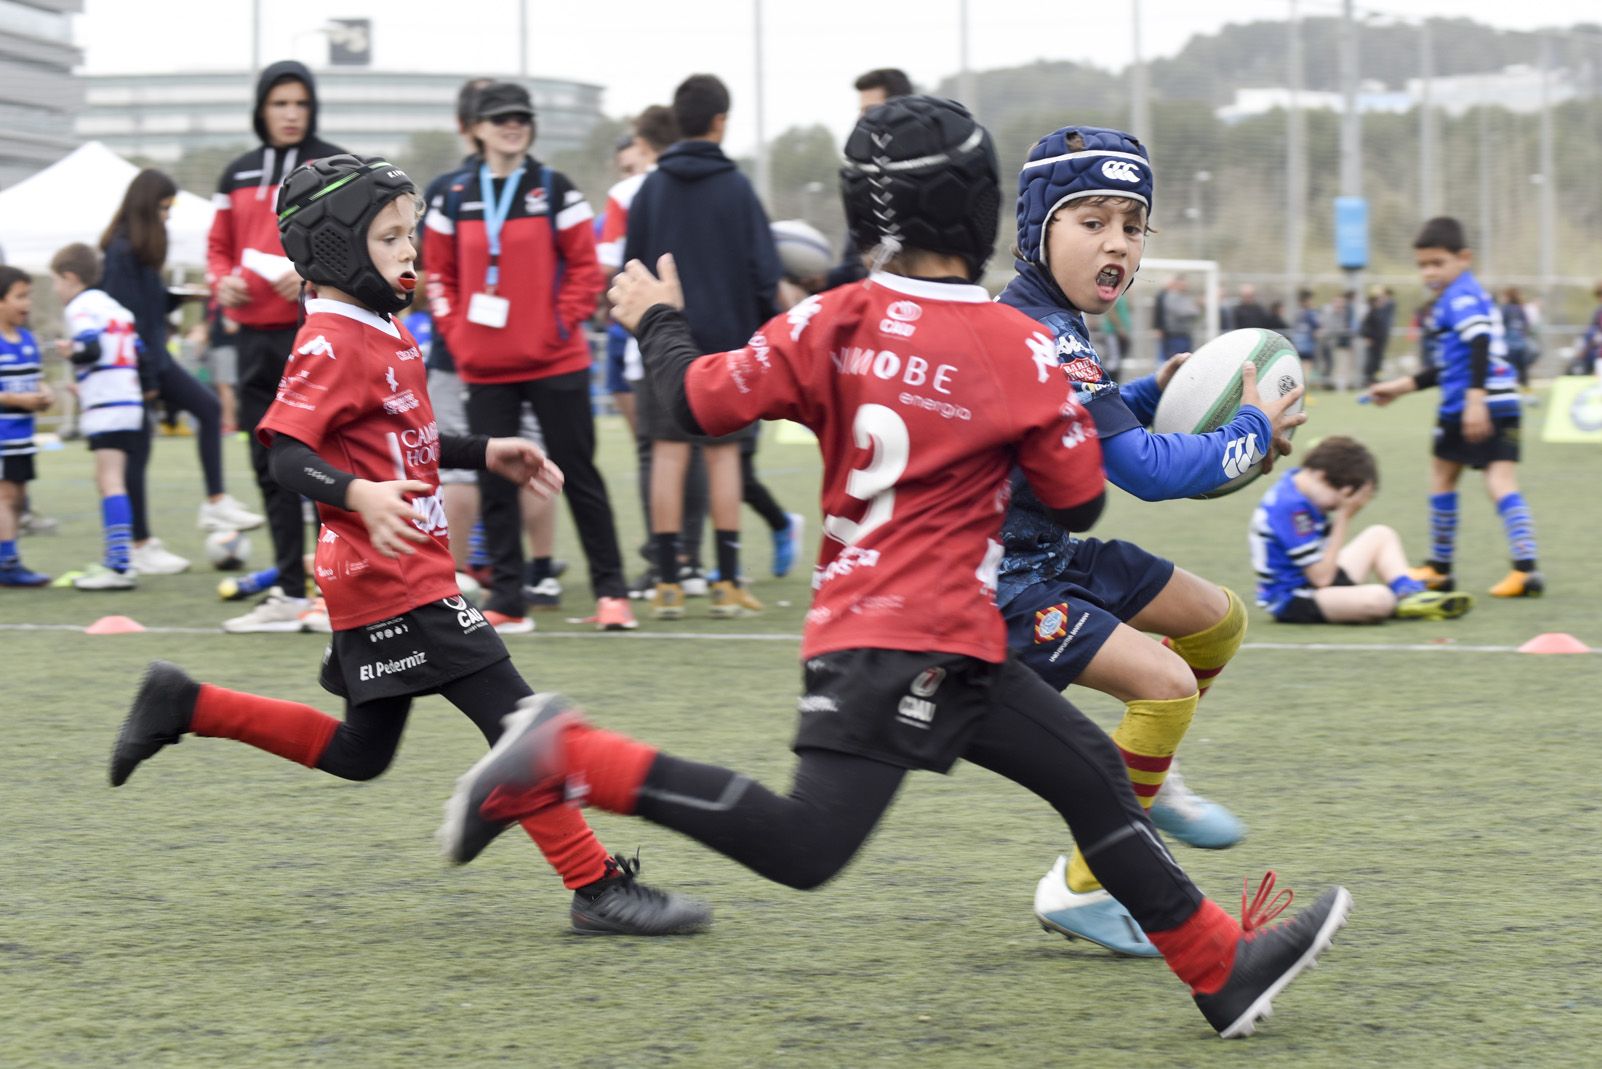 VI Torneig Jon Reca Escoles Rugby. Foto: Bernat Millet.